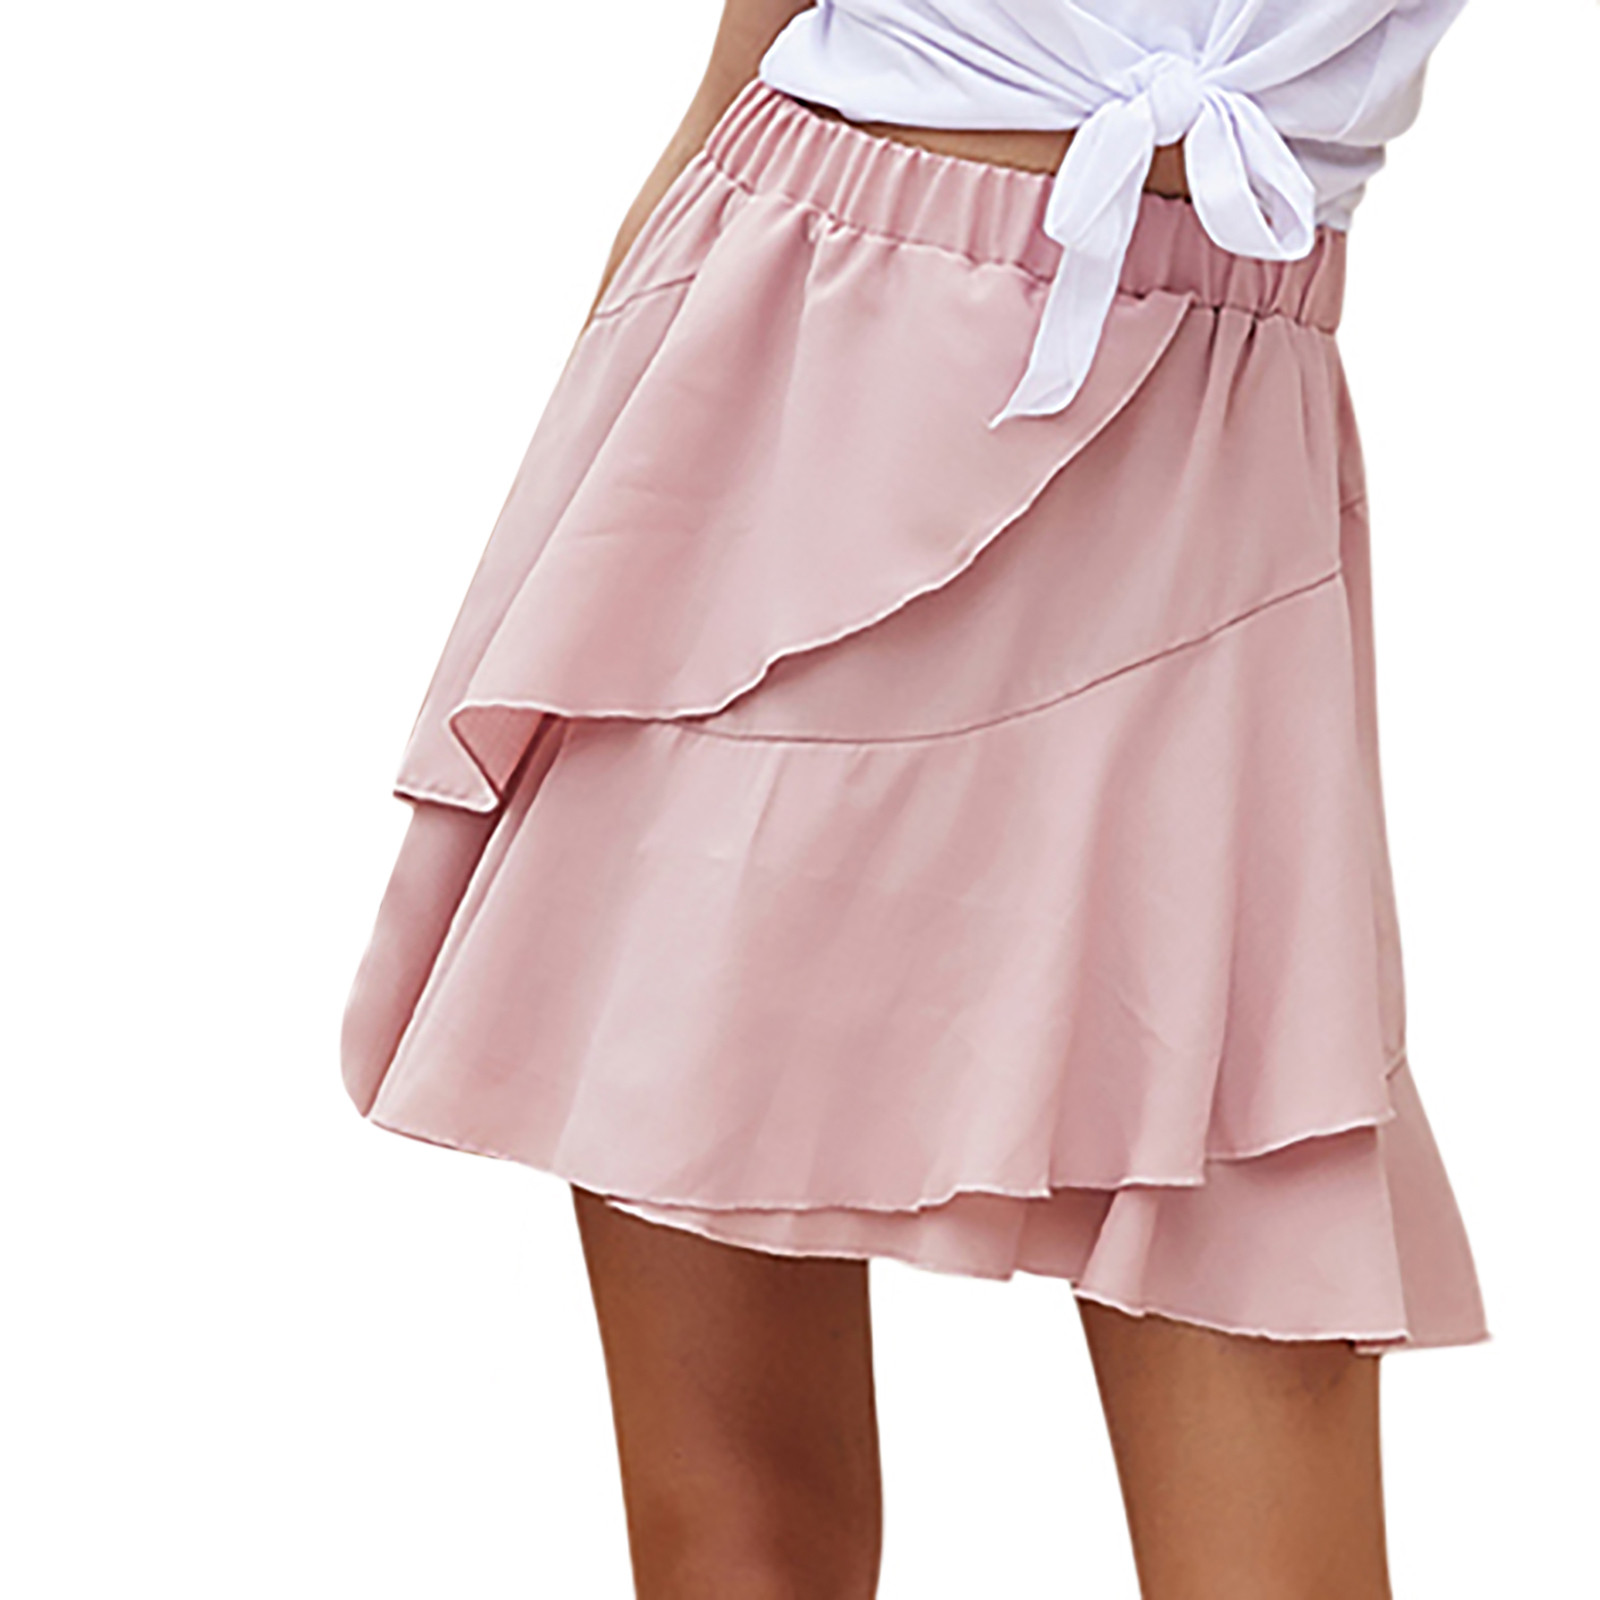 MIASHUI Summer Skirts Women's Dress Solid Cute Elastic Waist Ruffles ...